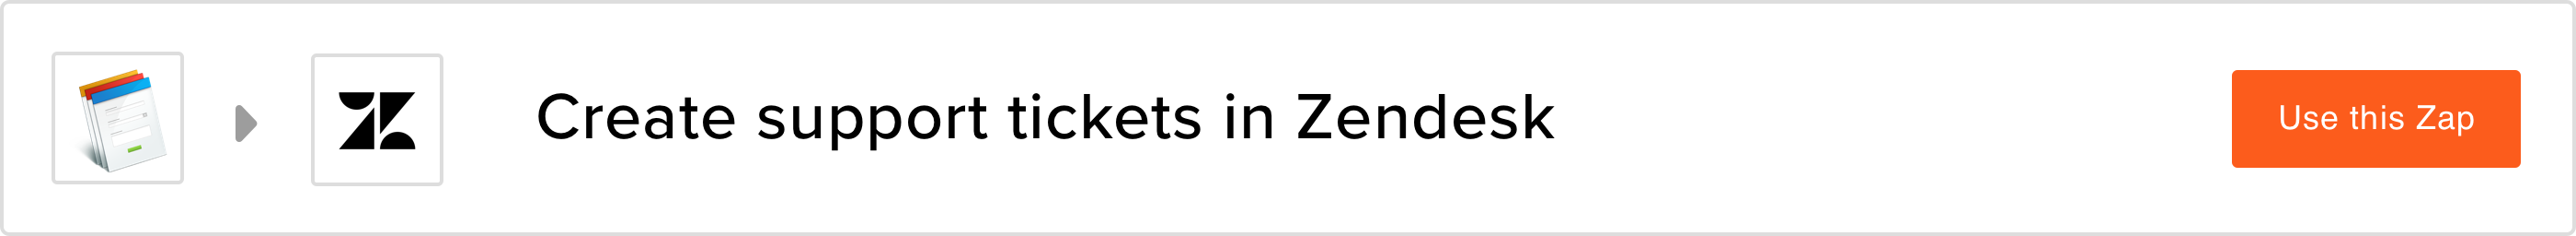 Create support tickets in Zendesk